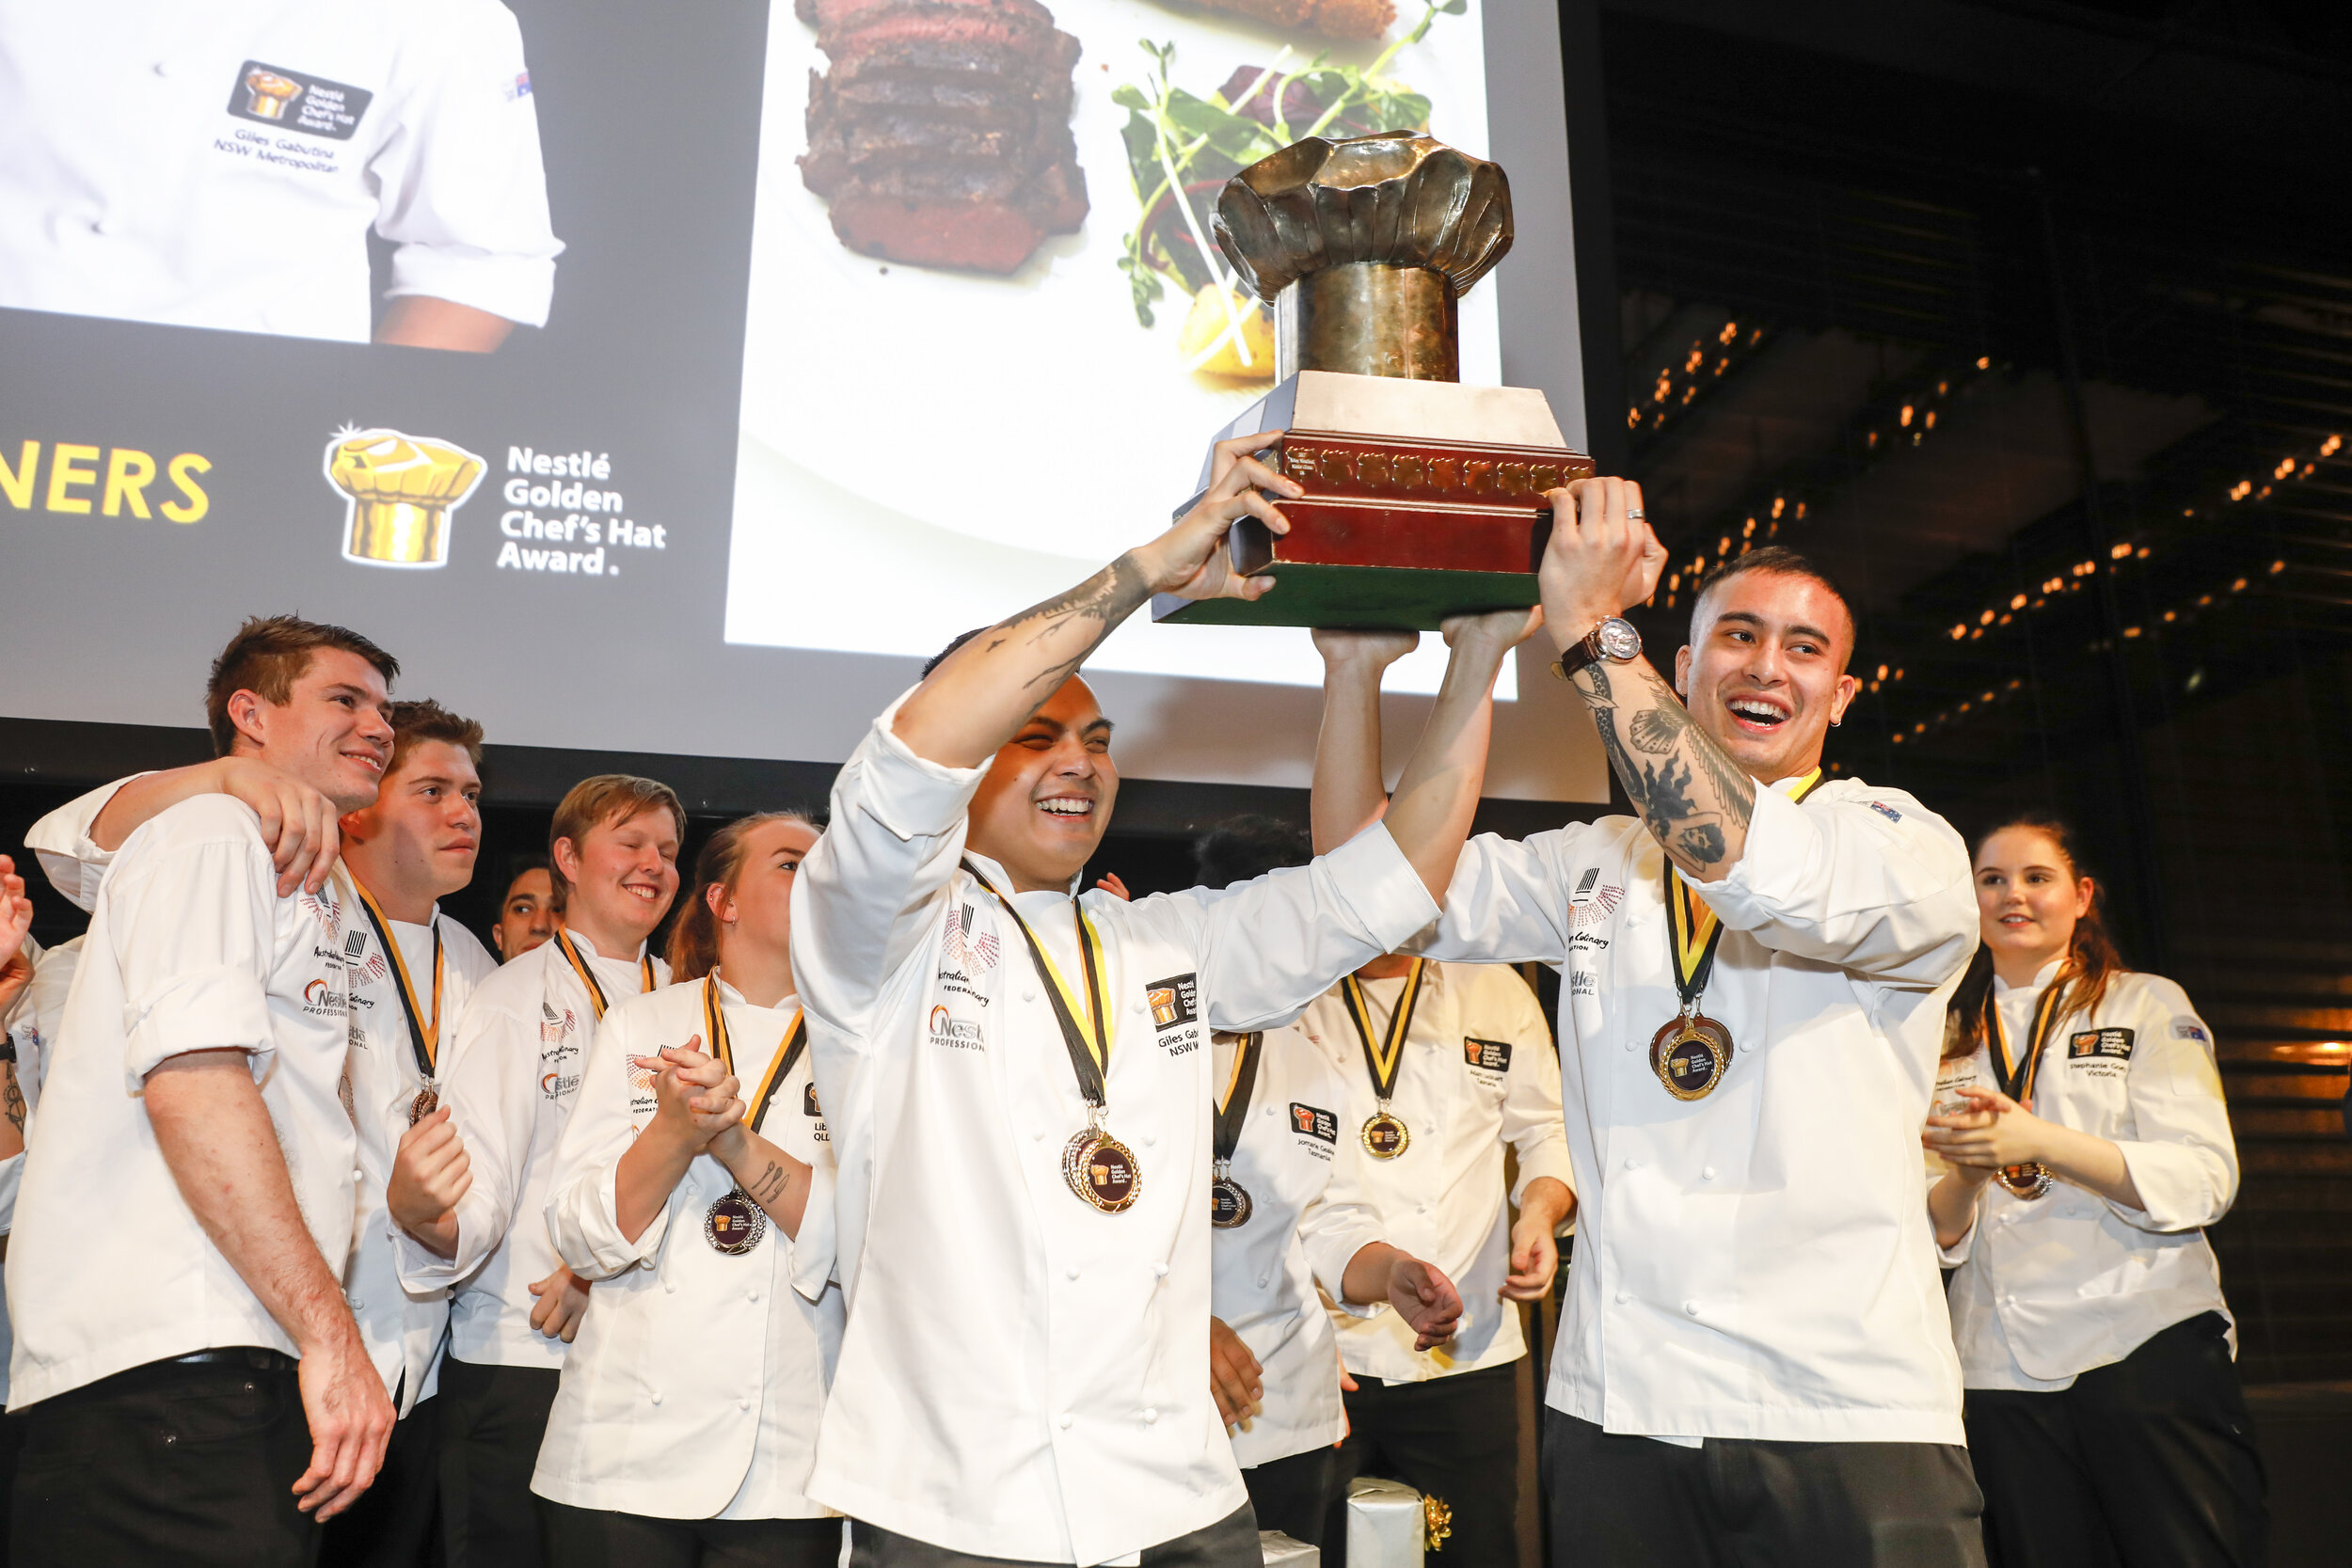 2019 Nestlé Golden Chef's Hat Award National Champions Alessio Nogarotto and Giles Gabutina With Big Hat Trophy.jpg